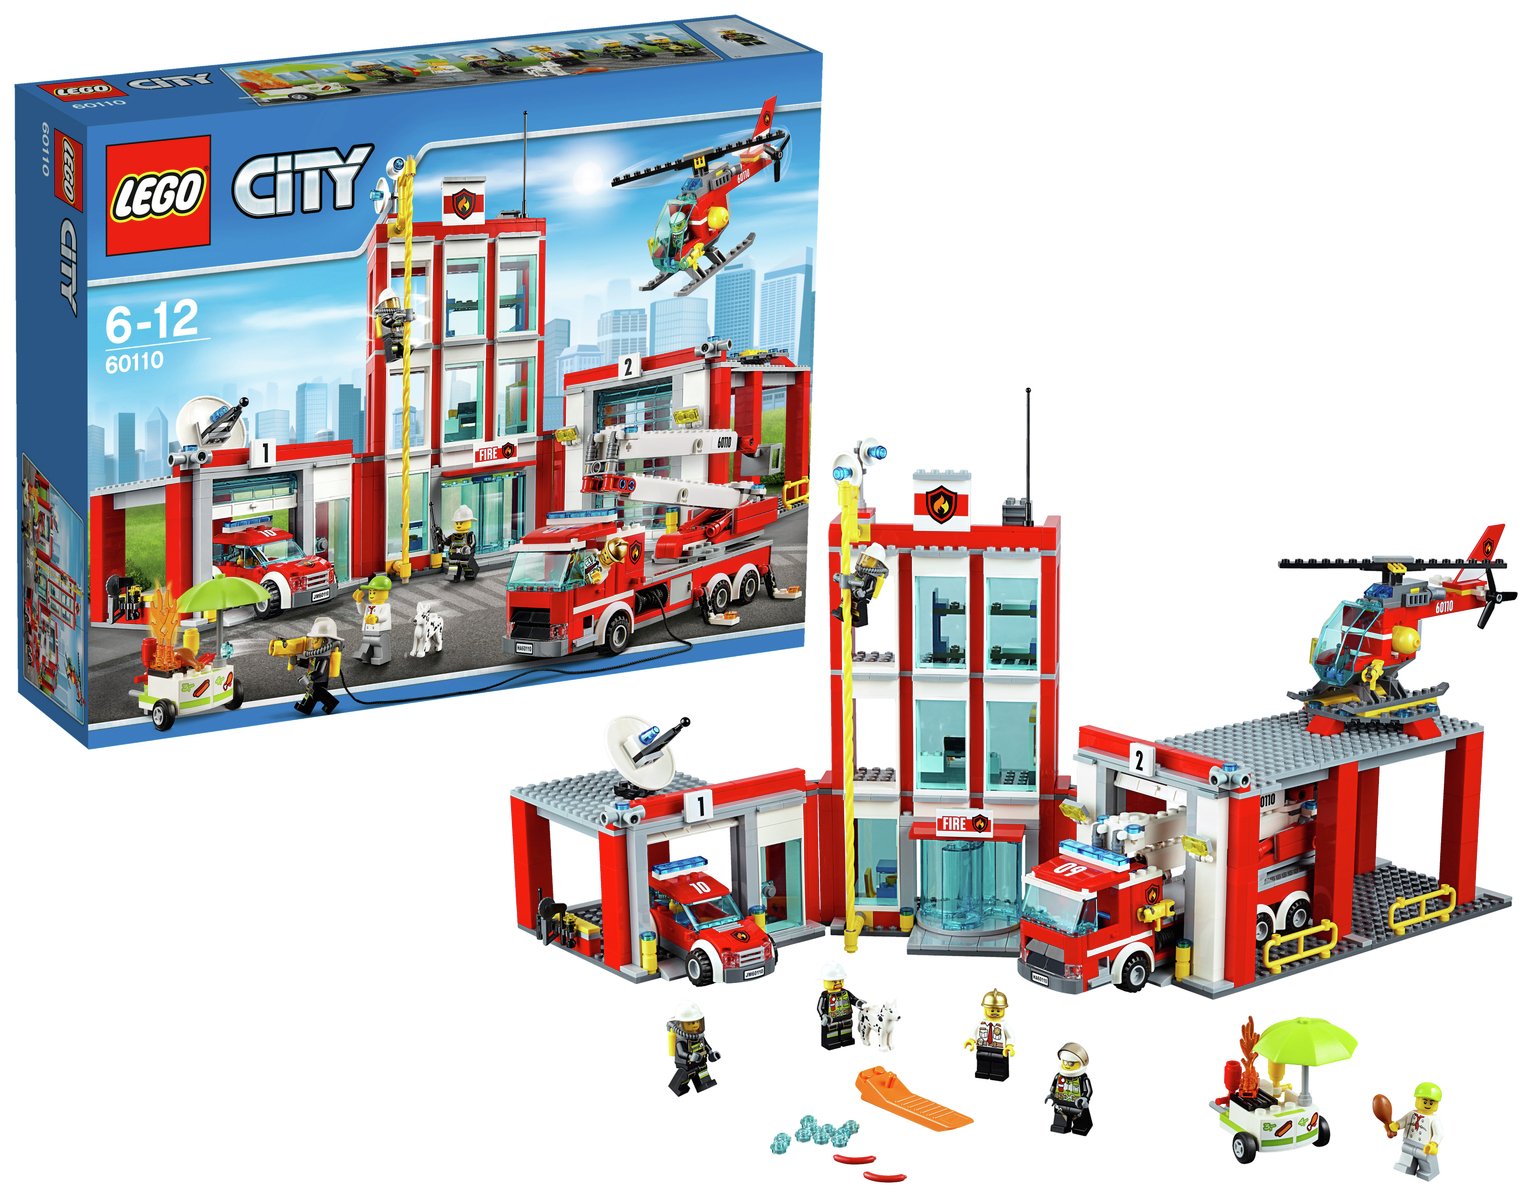 LEGO City Fire Station - 60110